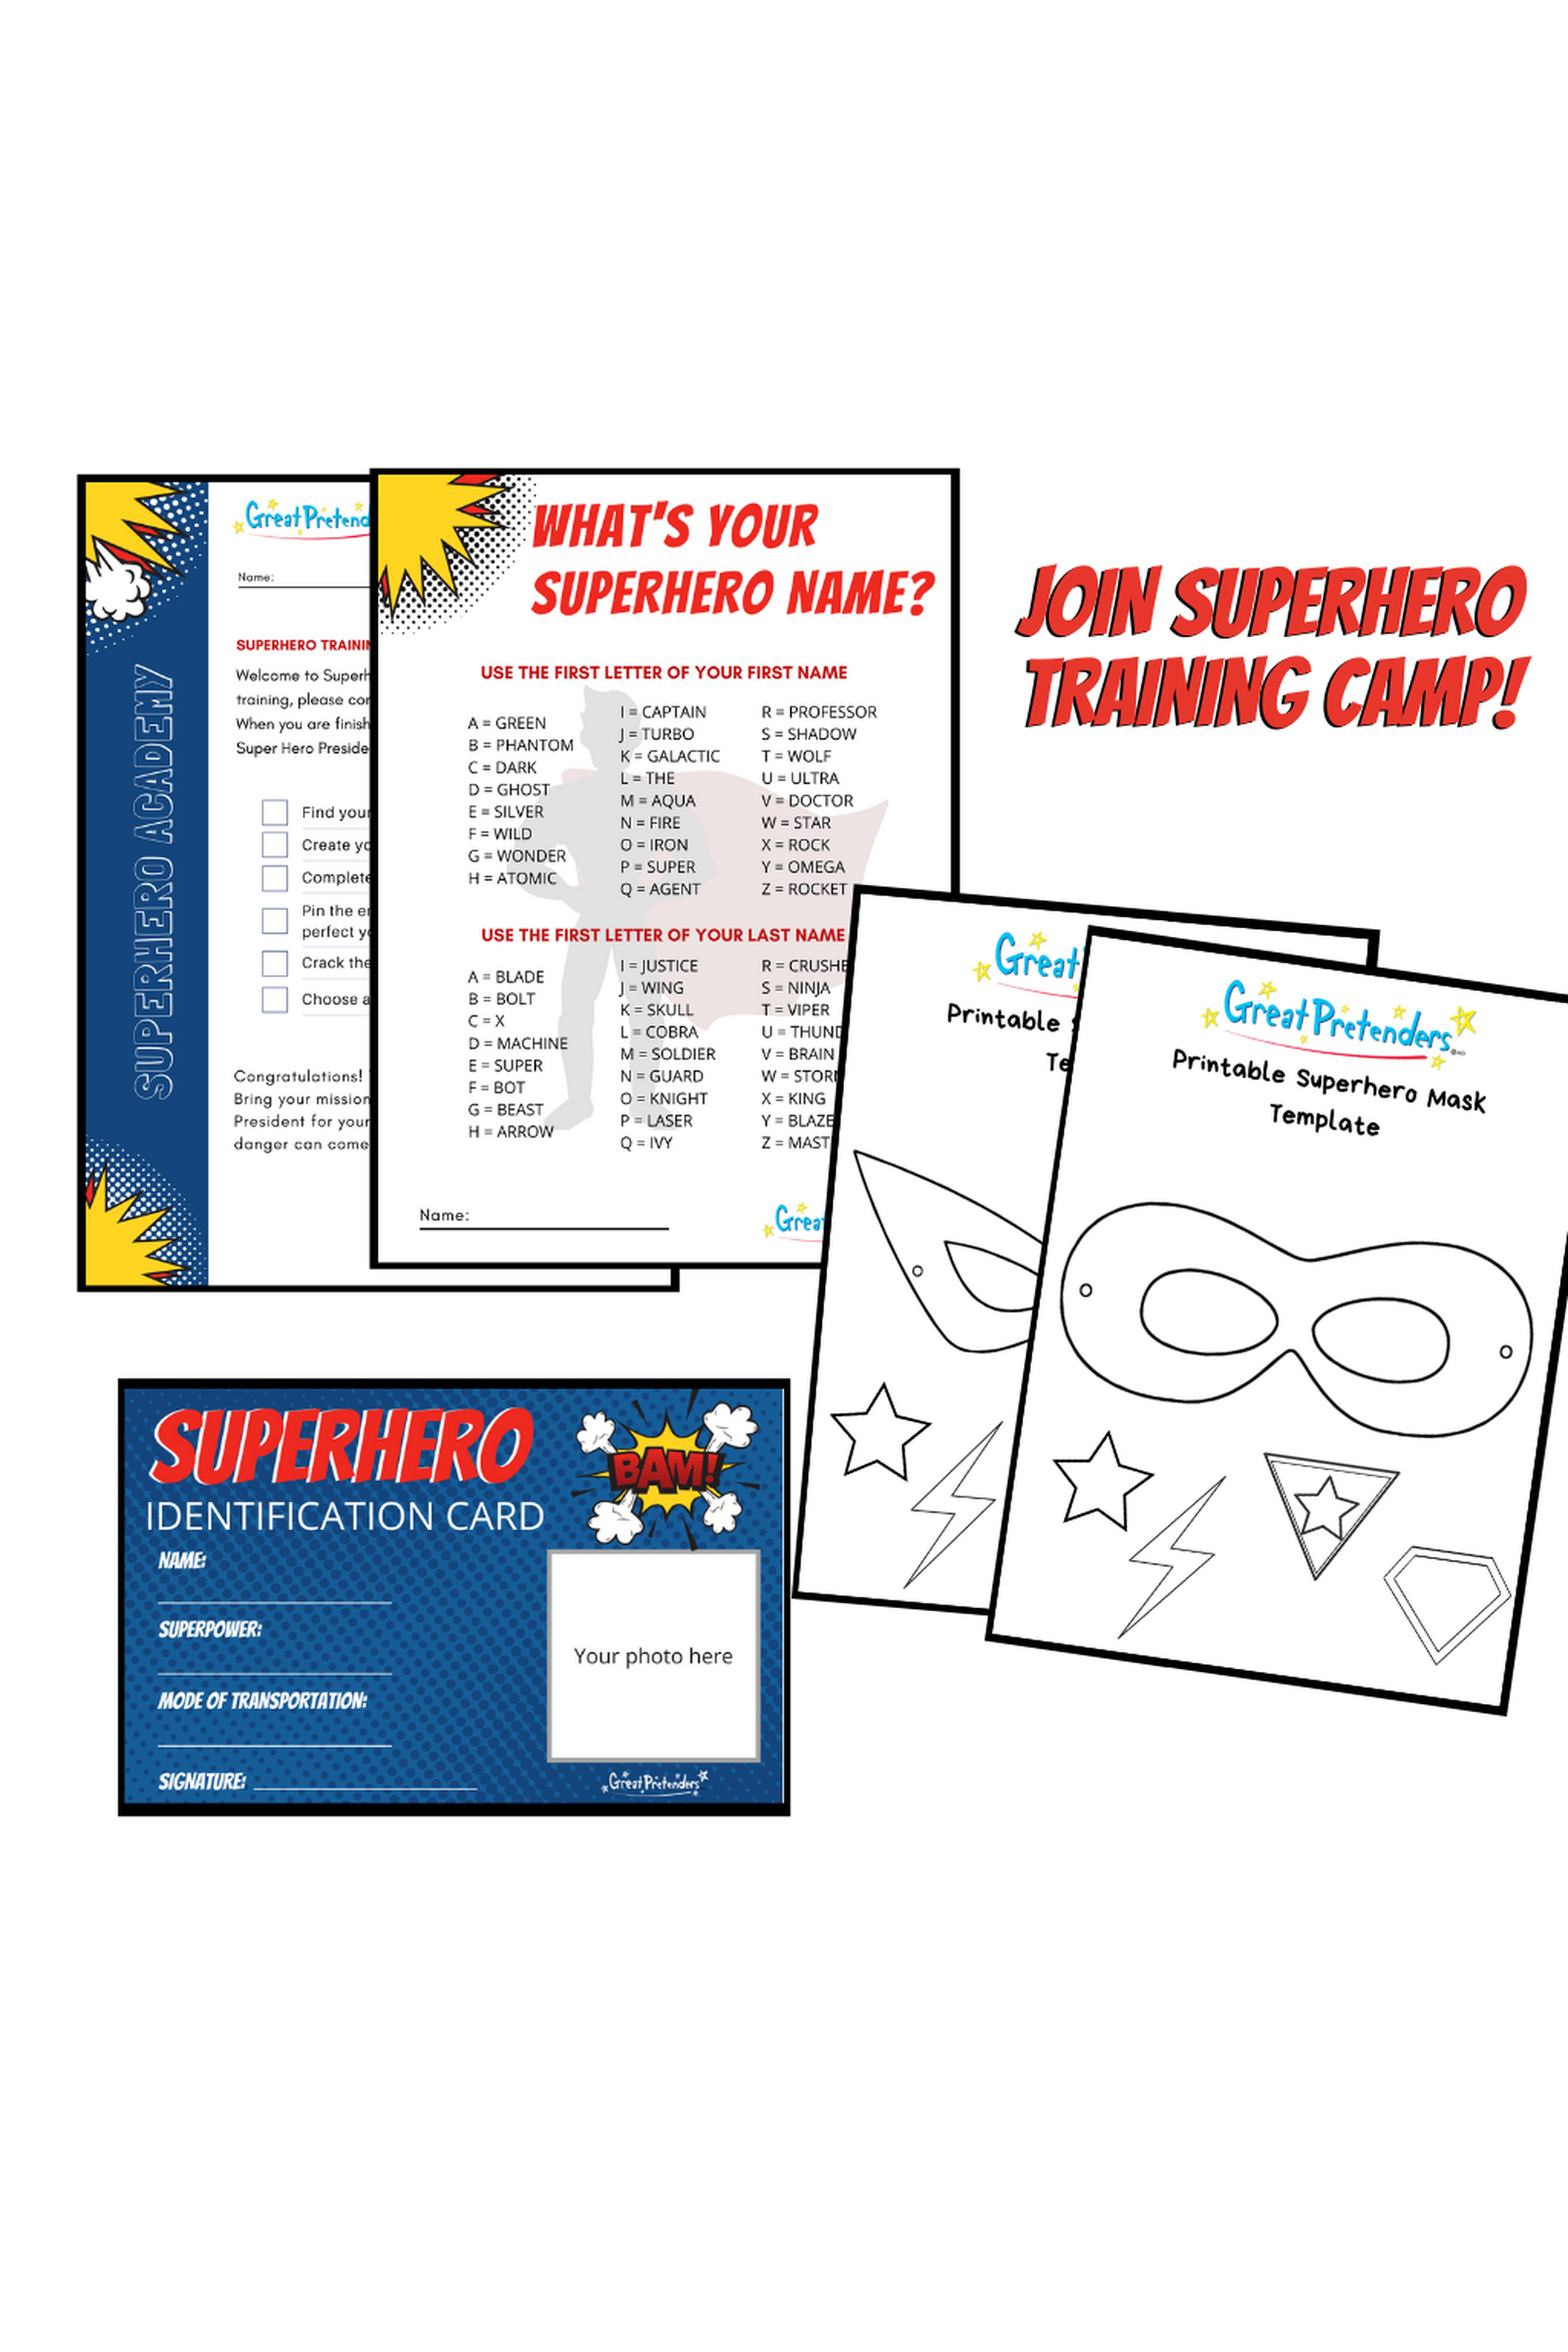 Superhero Training Camp